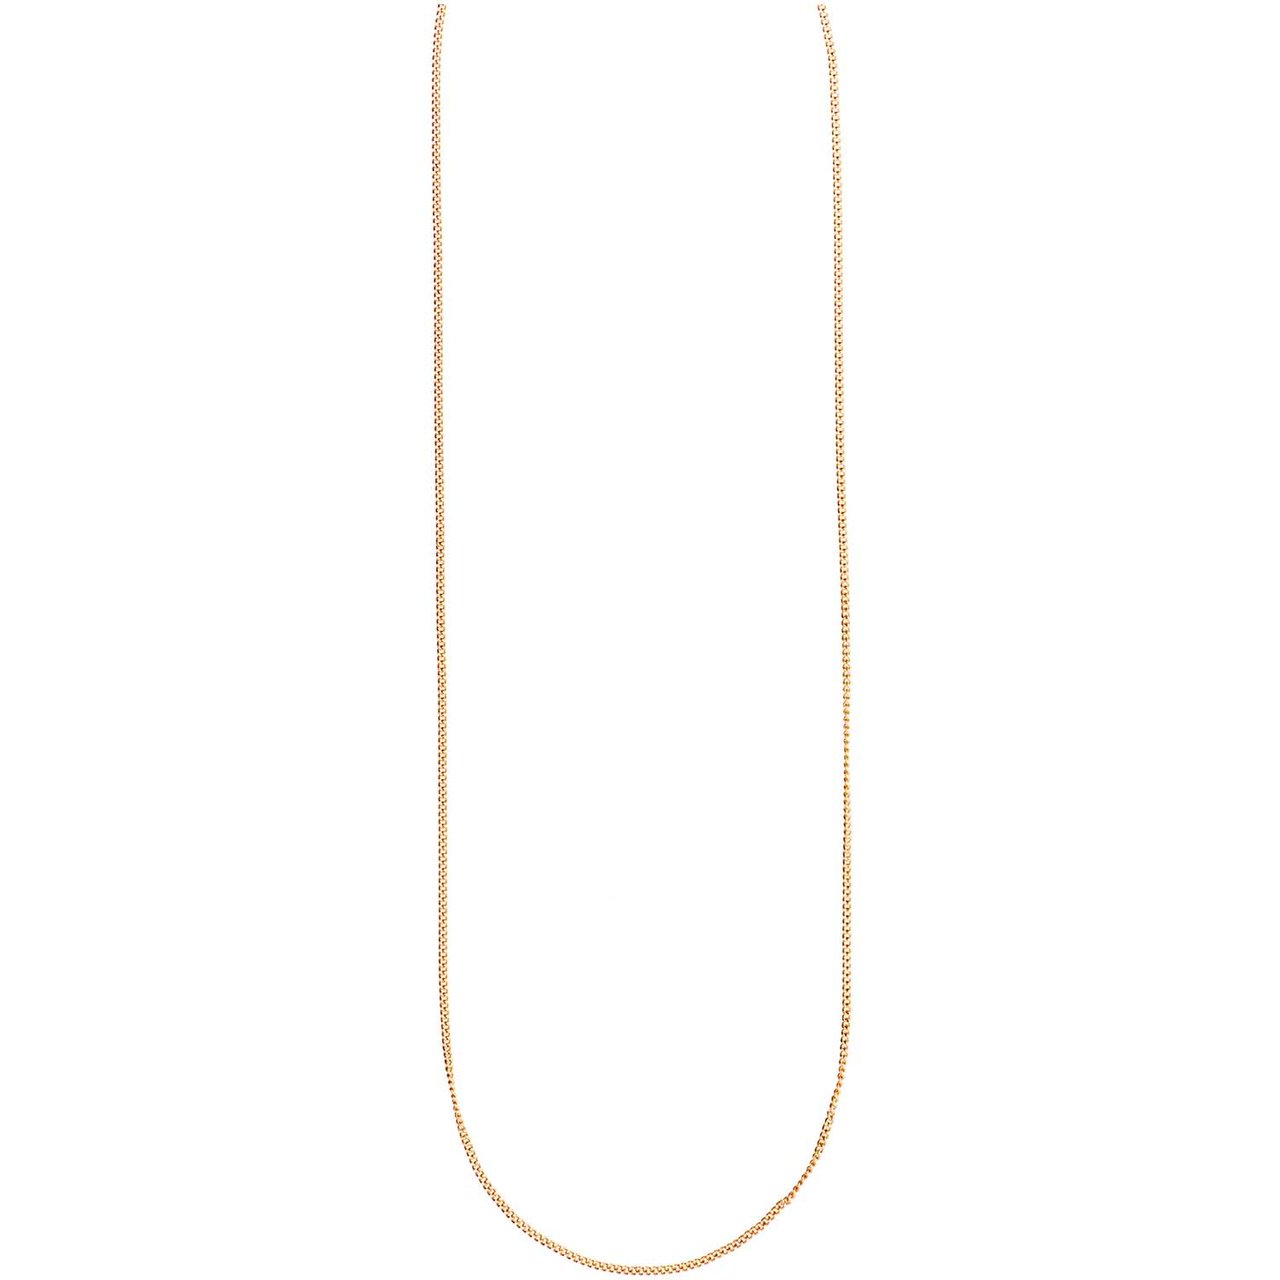 Mix it Up - Jewellery Gliederkette gold 45cm